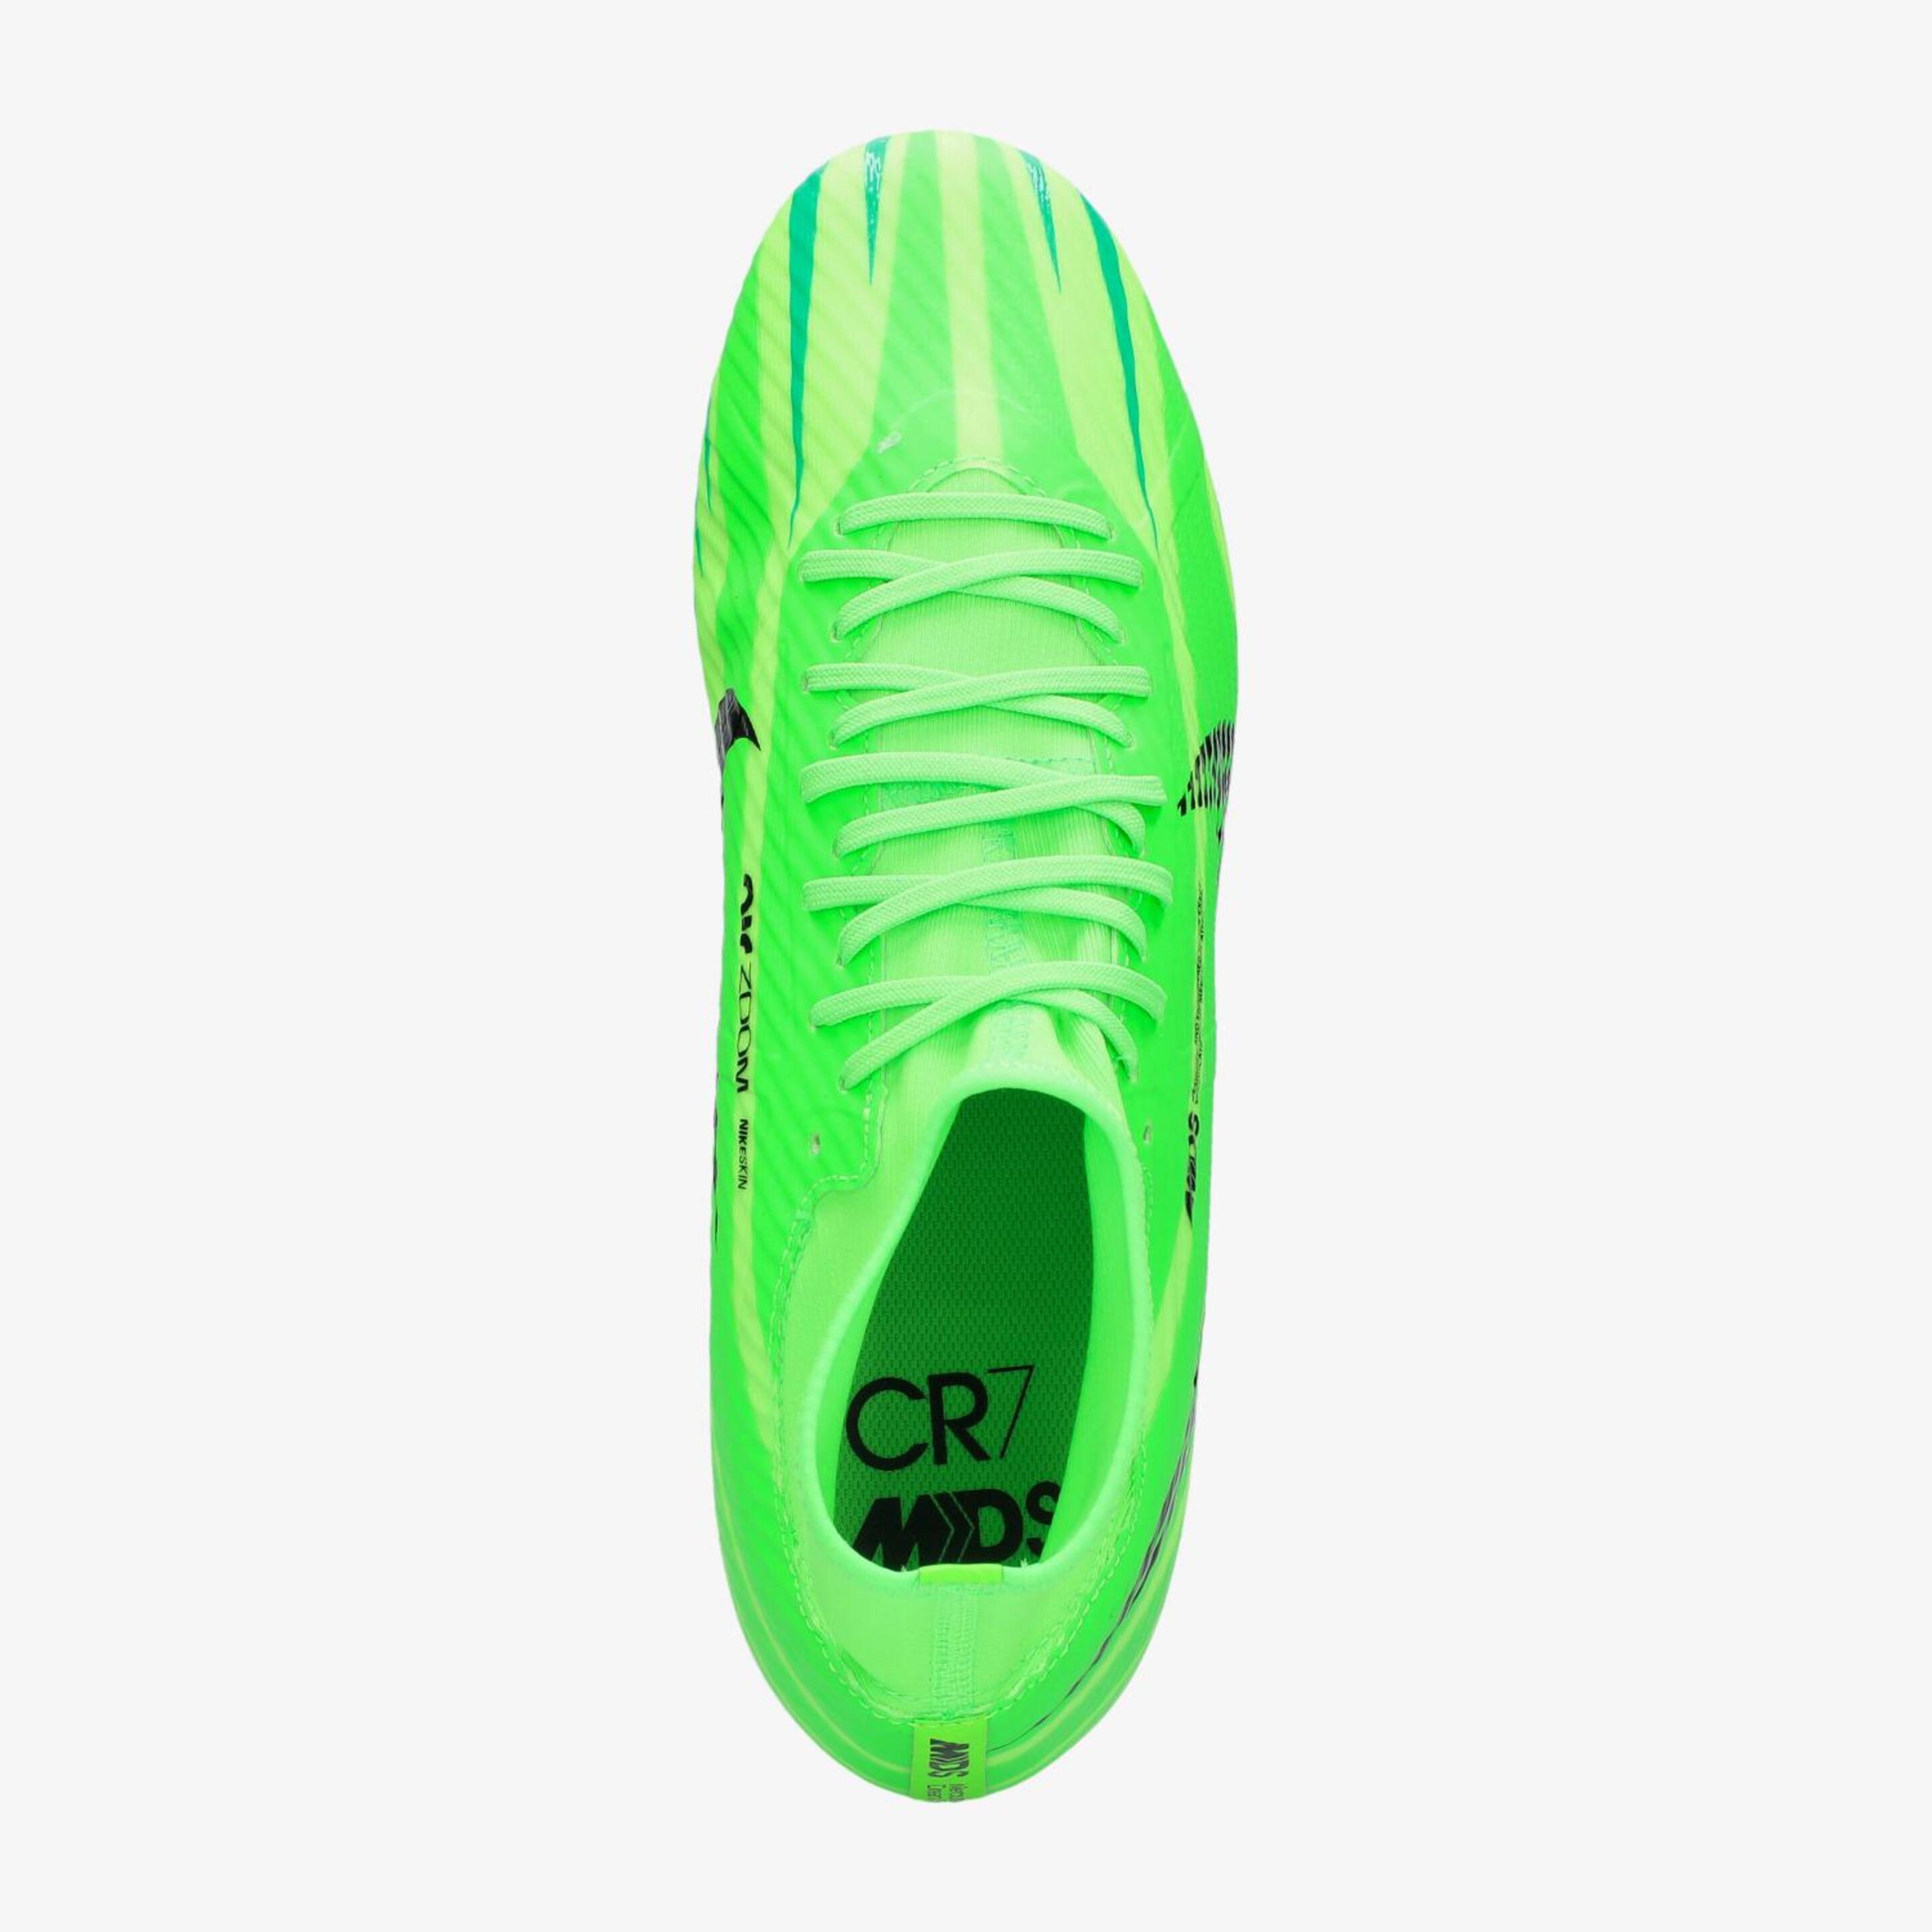 Nike Zoom Superfly Fg CR7 - Verde - Botas Fútbol Tacos